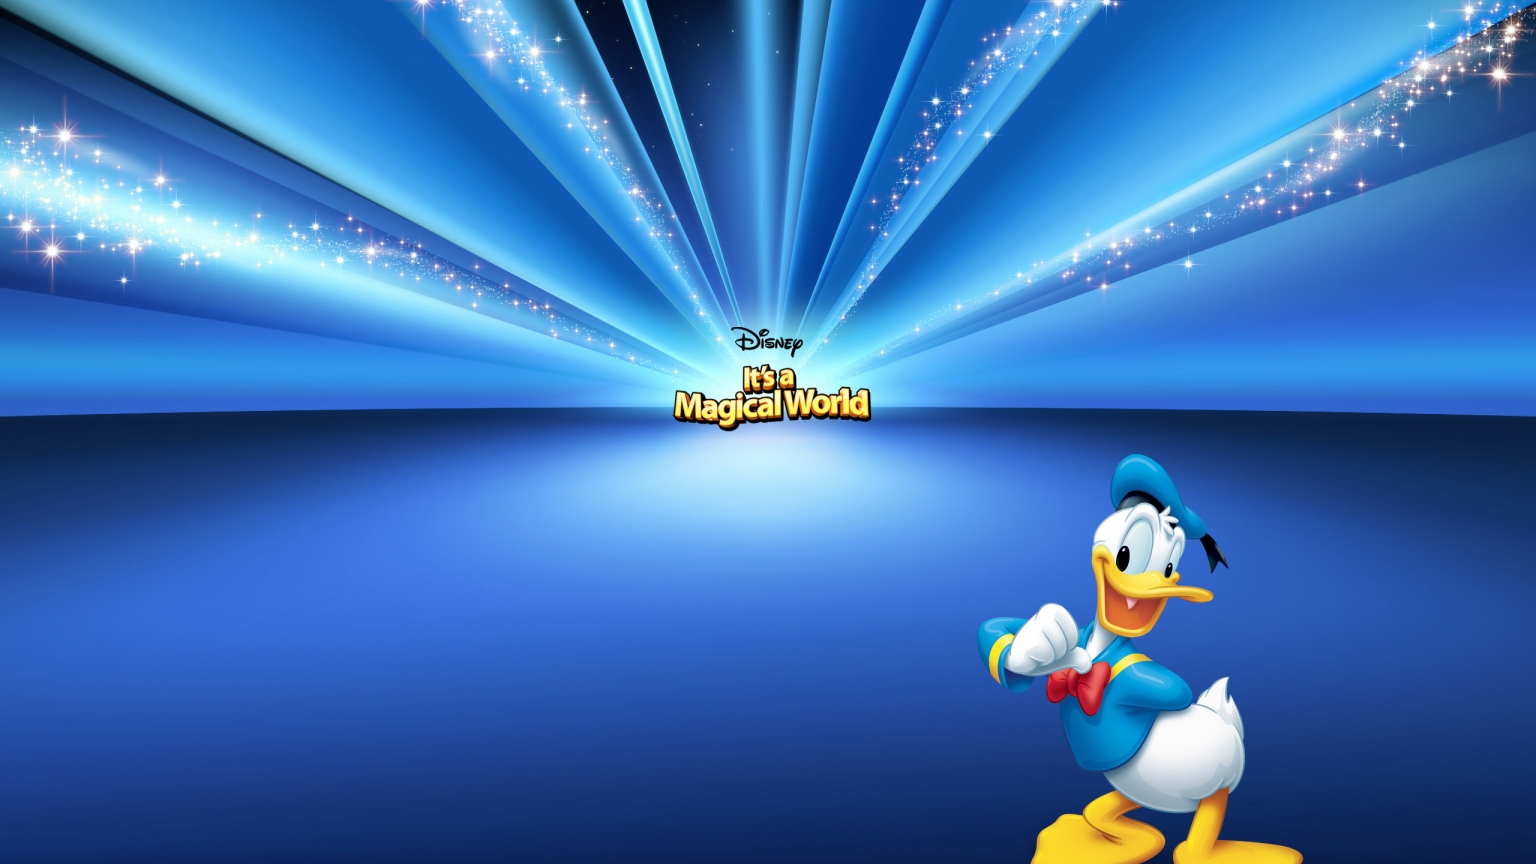 Donald Duck Cartoon for 1536 x 864 HDTV resolution